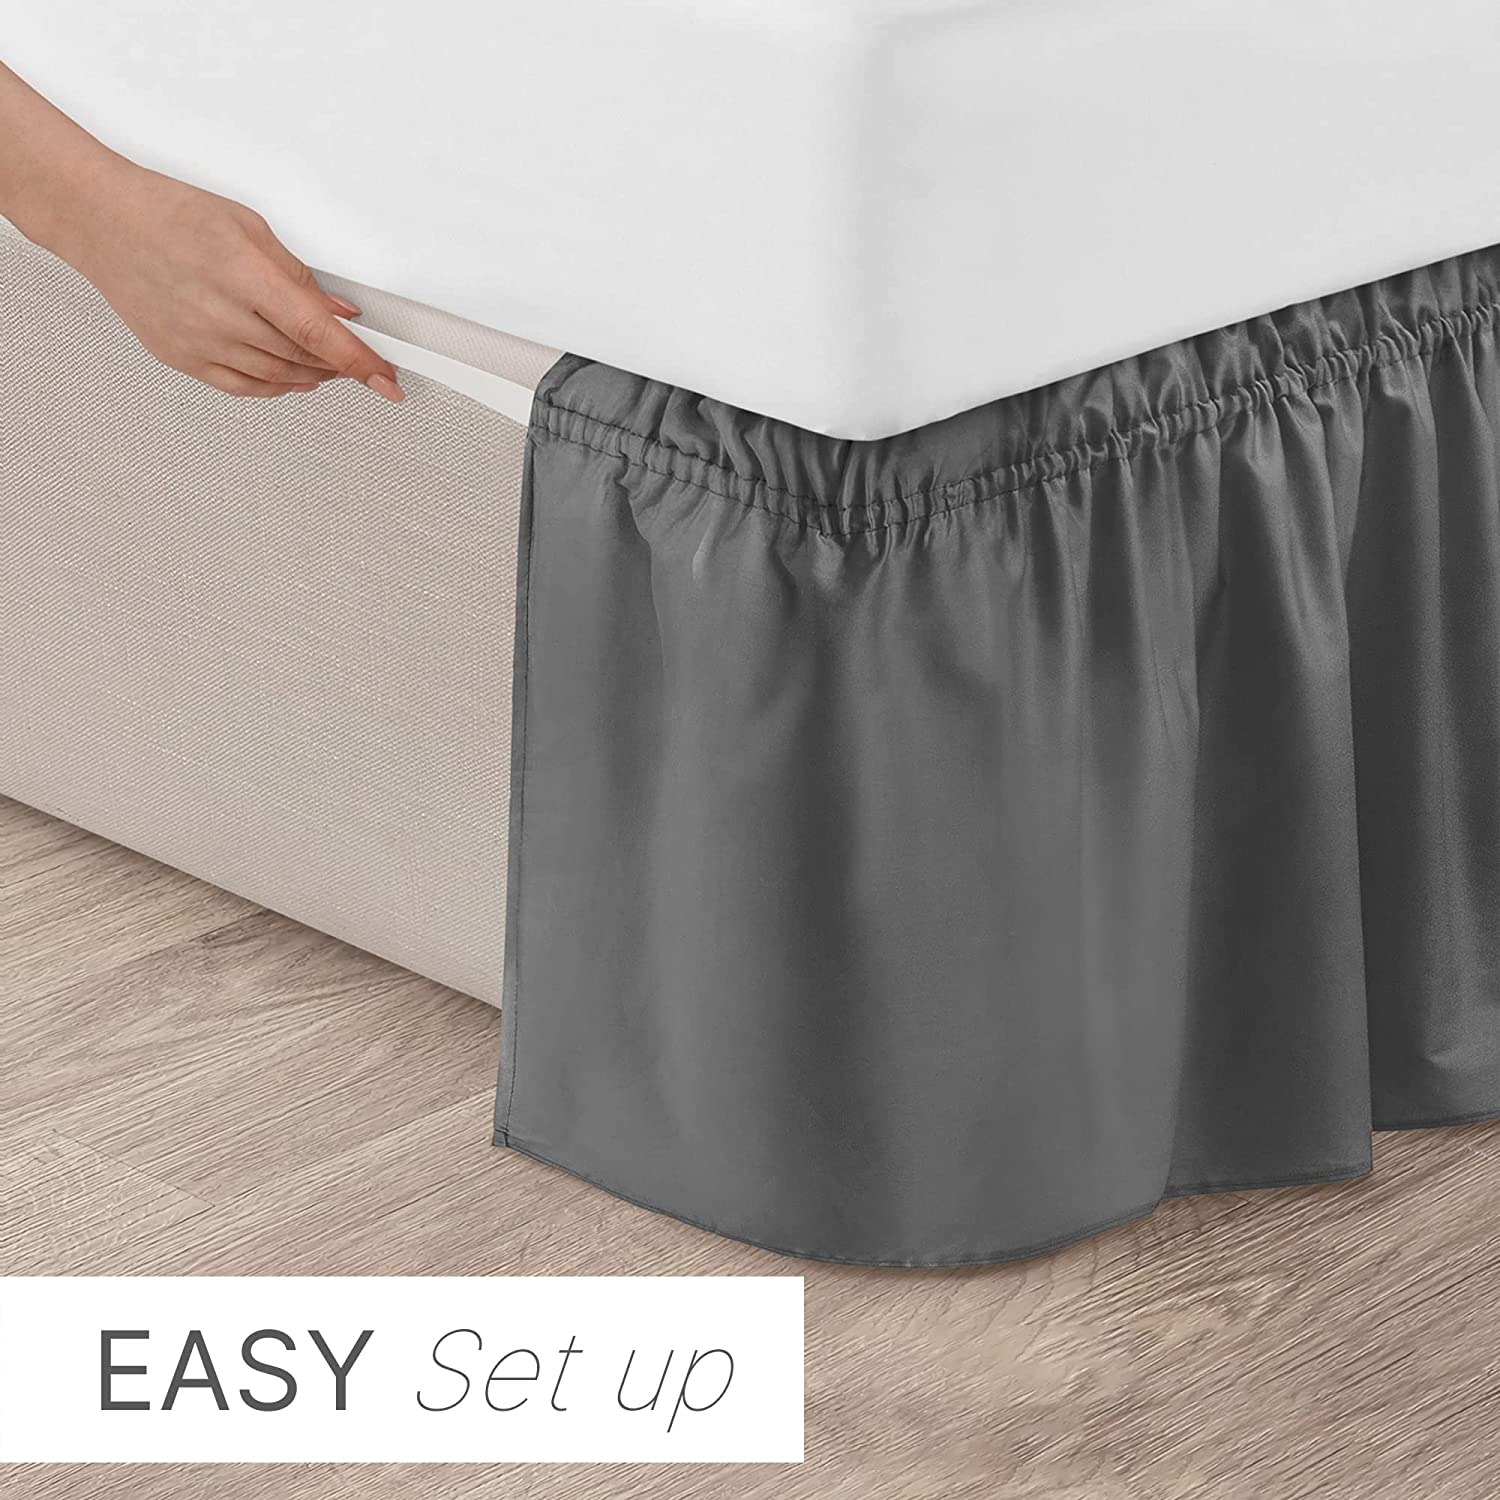 tes Ruffled Elastic Wrap Around Bedskirt 15 Inch Drop - Gray